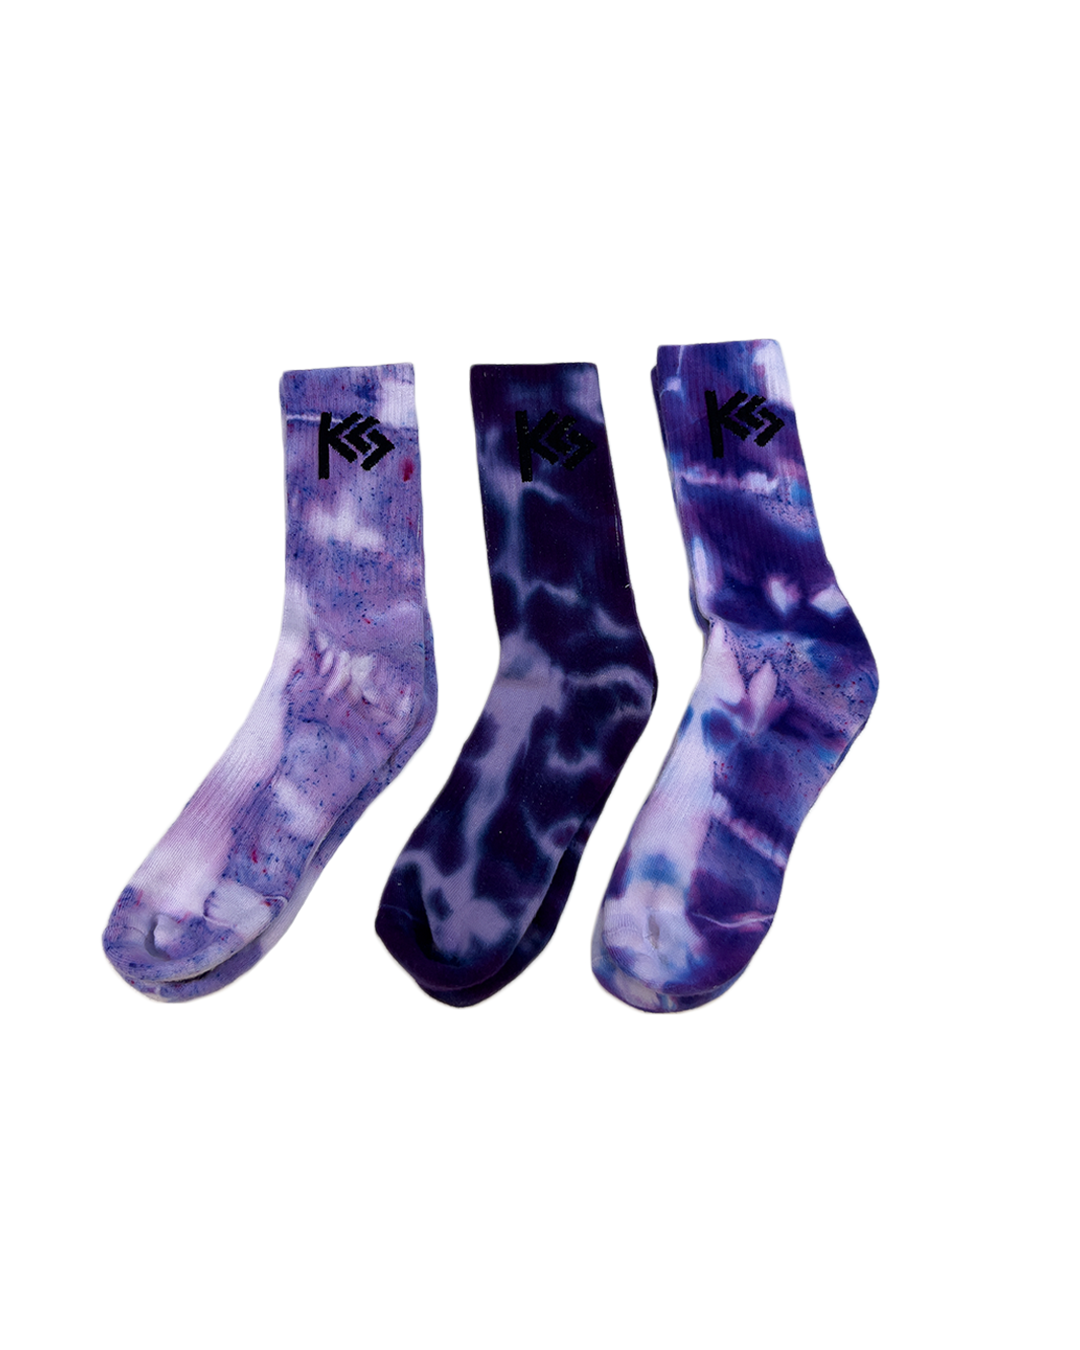 "Purple Rain" Hand-Dyed Crew Socks